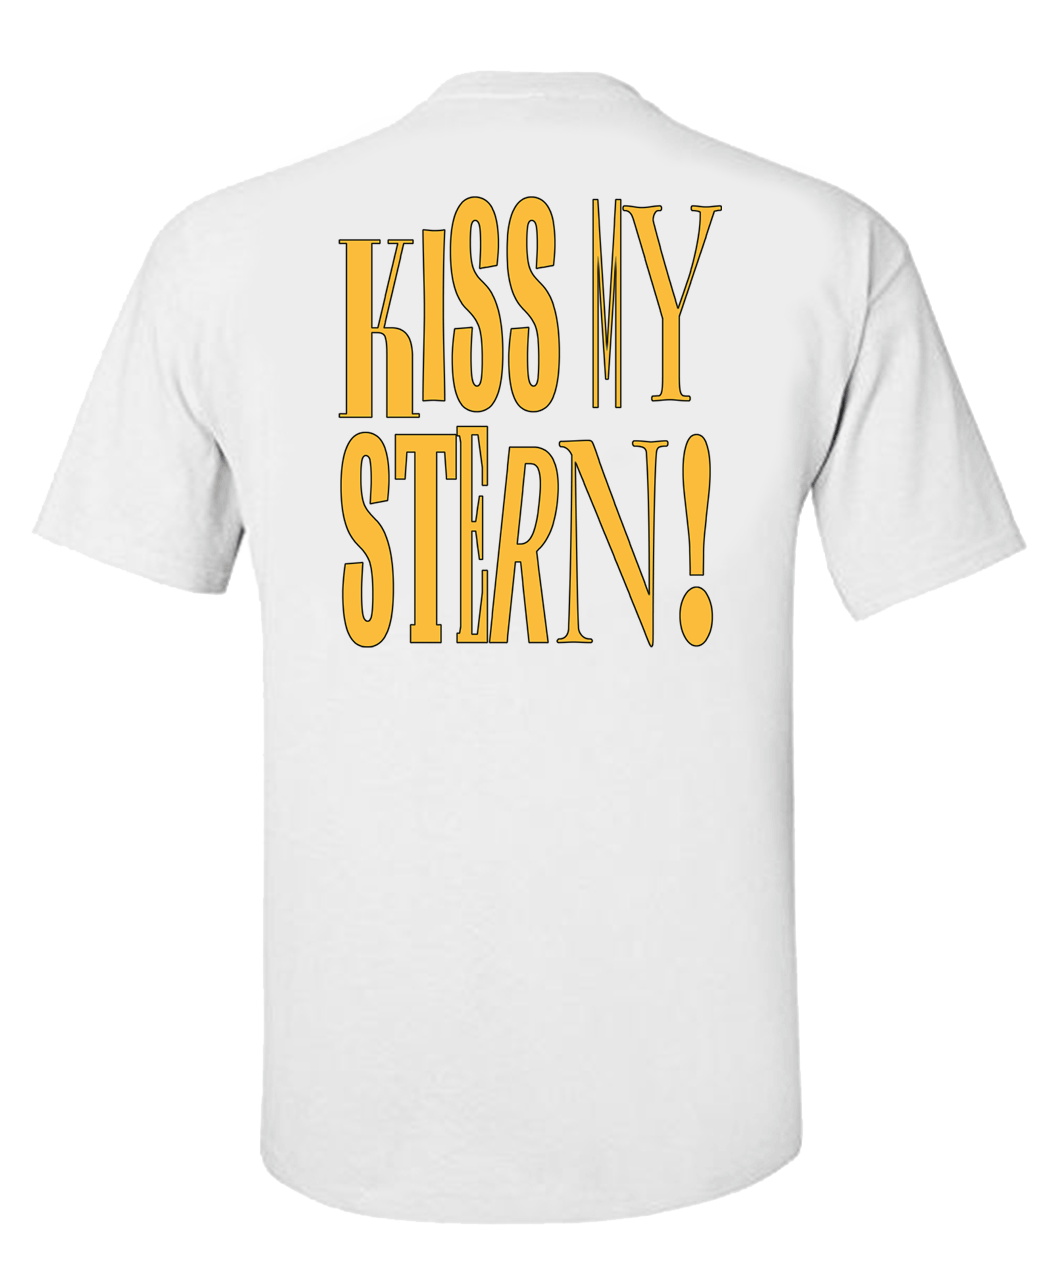 Kiss My Stern Unisex T-Shirt